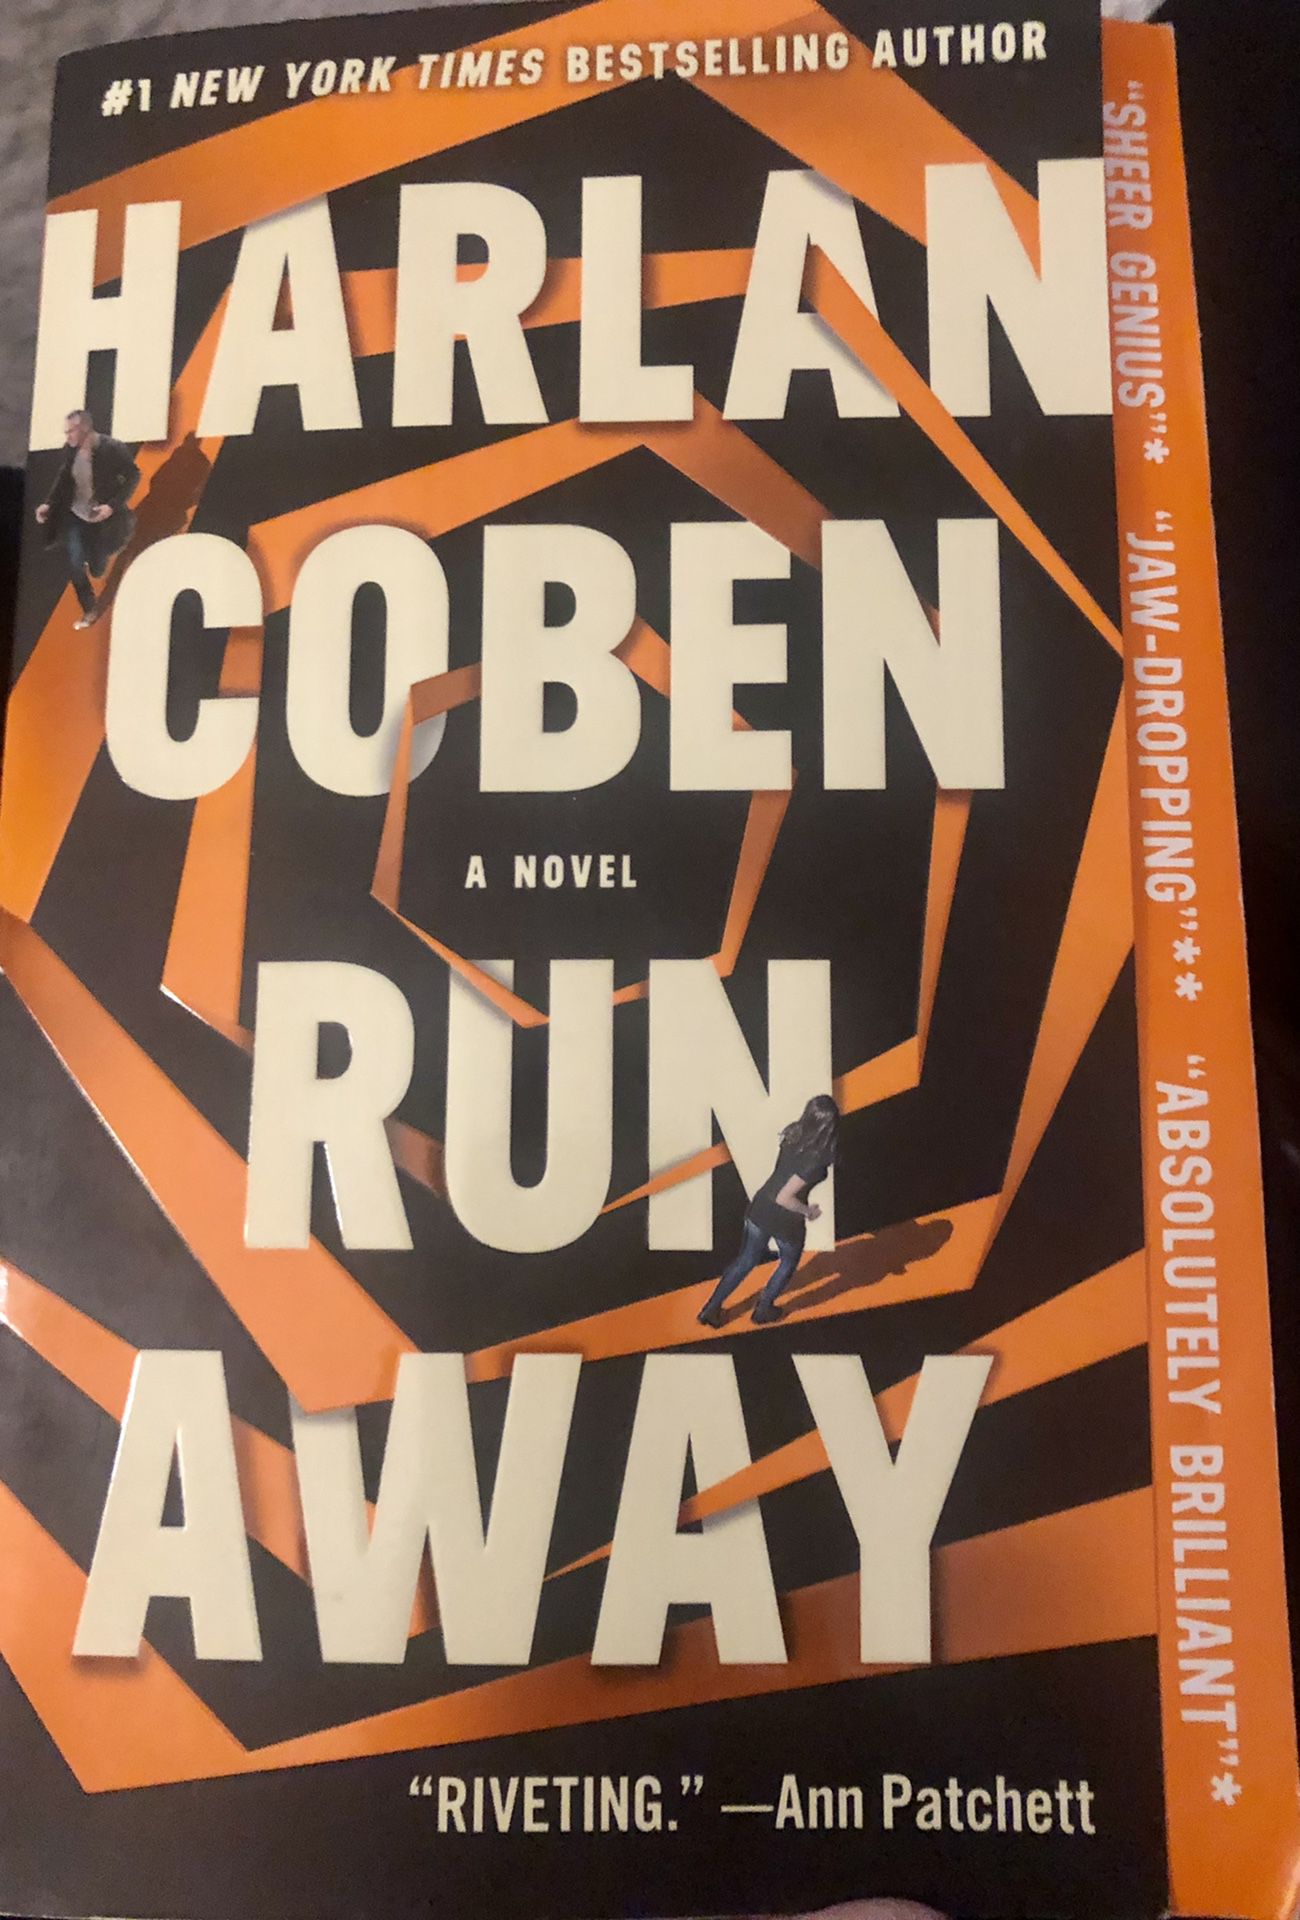 Book - Harlan Coben “Run Away